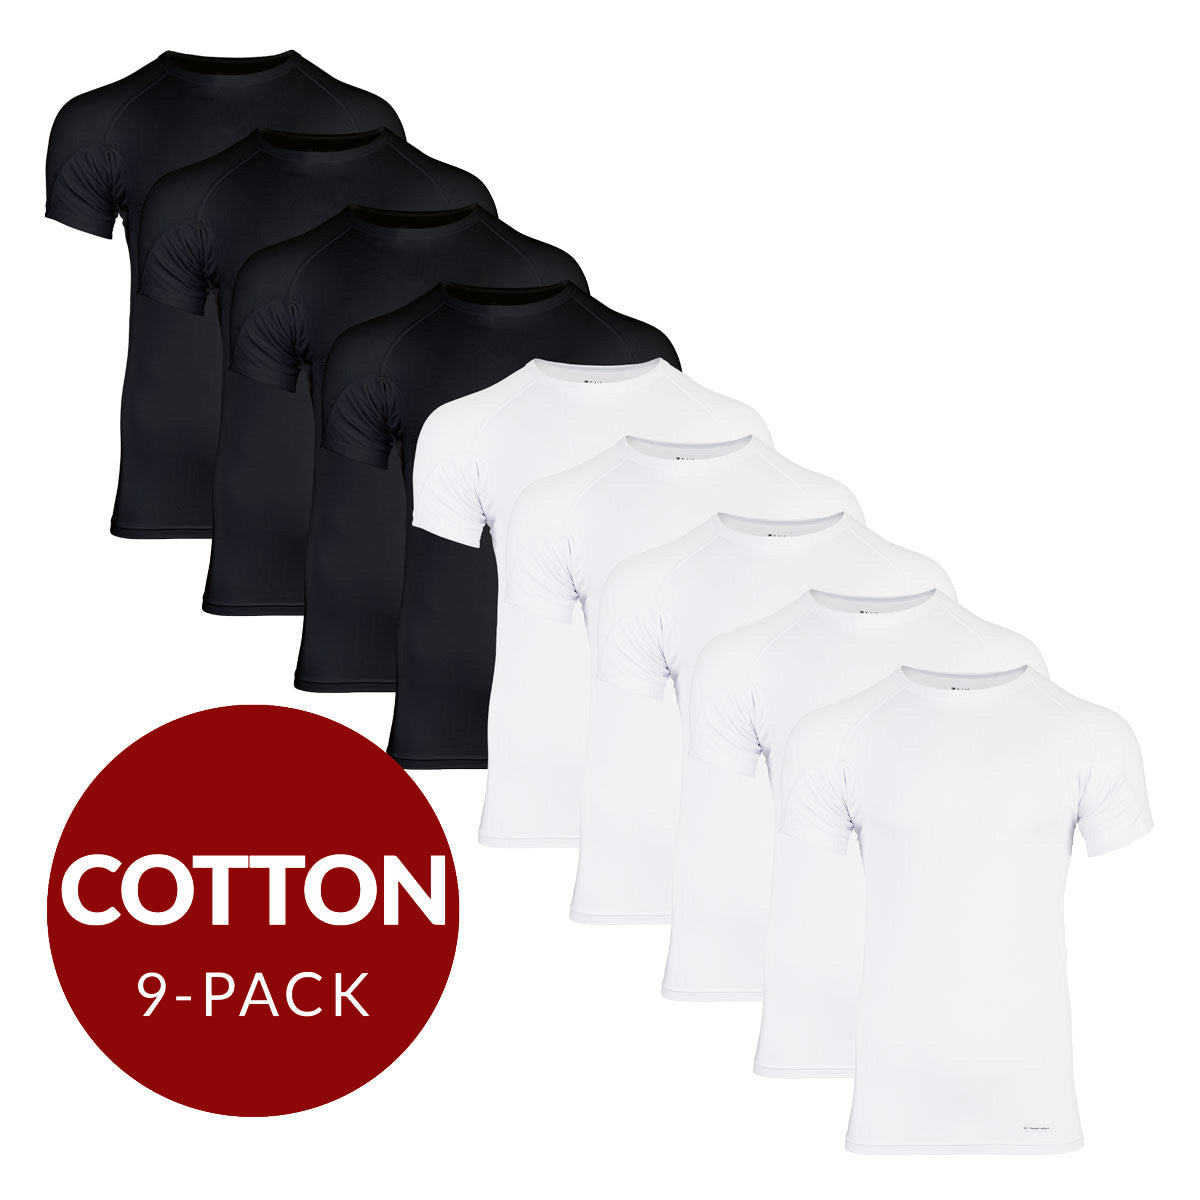 Crew Neck Cotton Sweat Proof Undershirt For Men - Mix 9-Pack (5x White, 4x Black) - Ejis